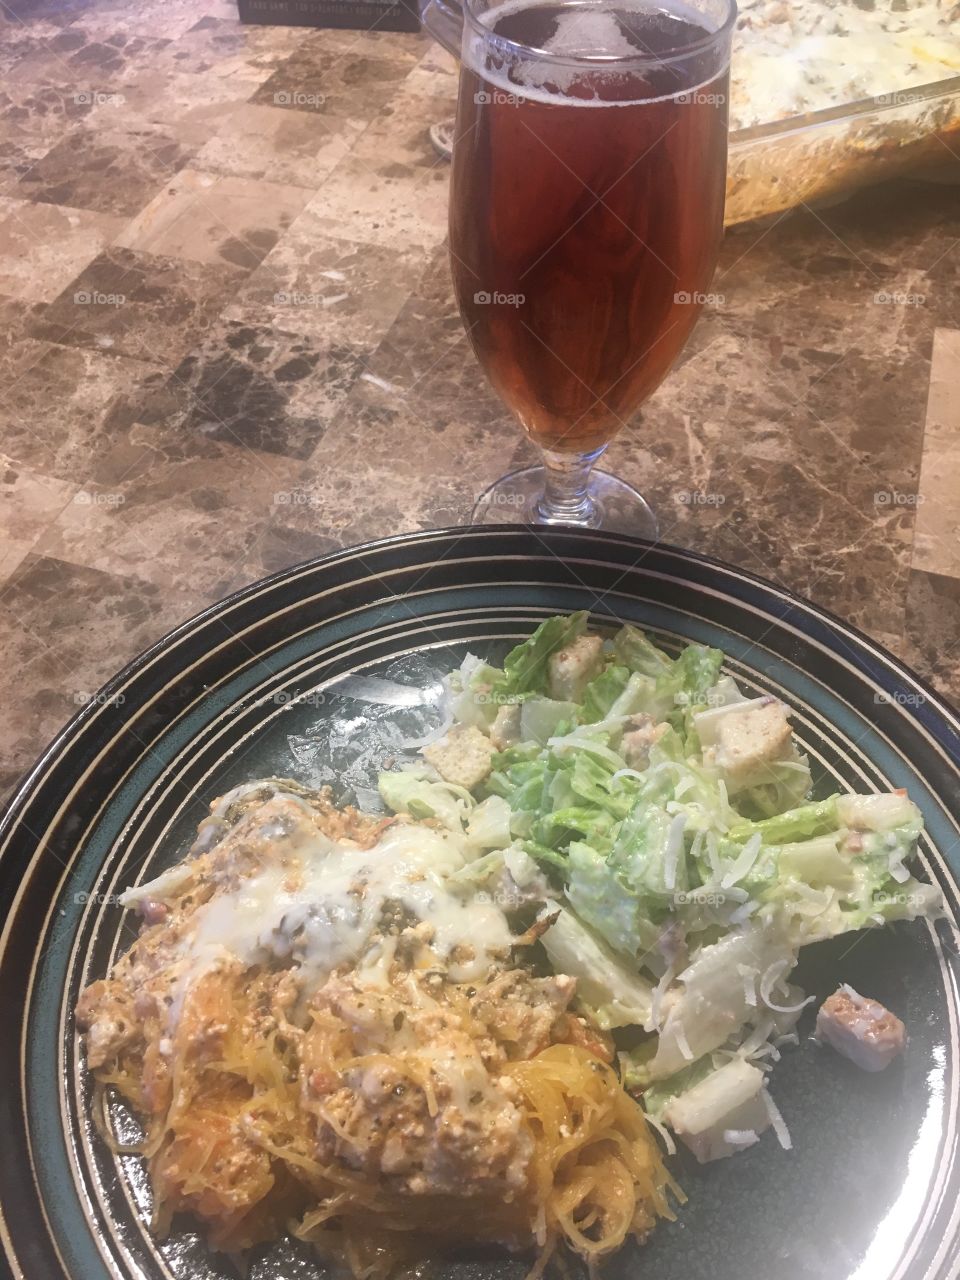 Pesto chicken spaghetti squash bake with Caesar salad and beer 